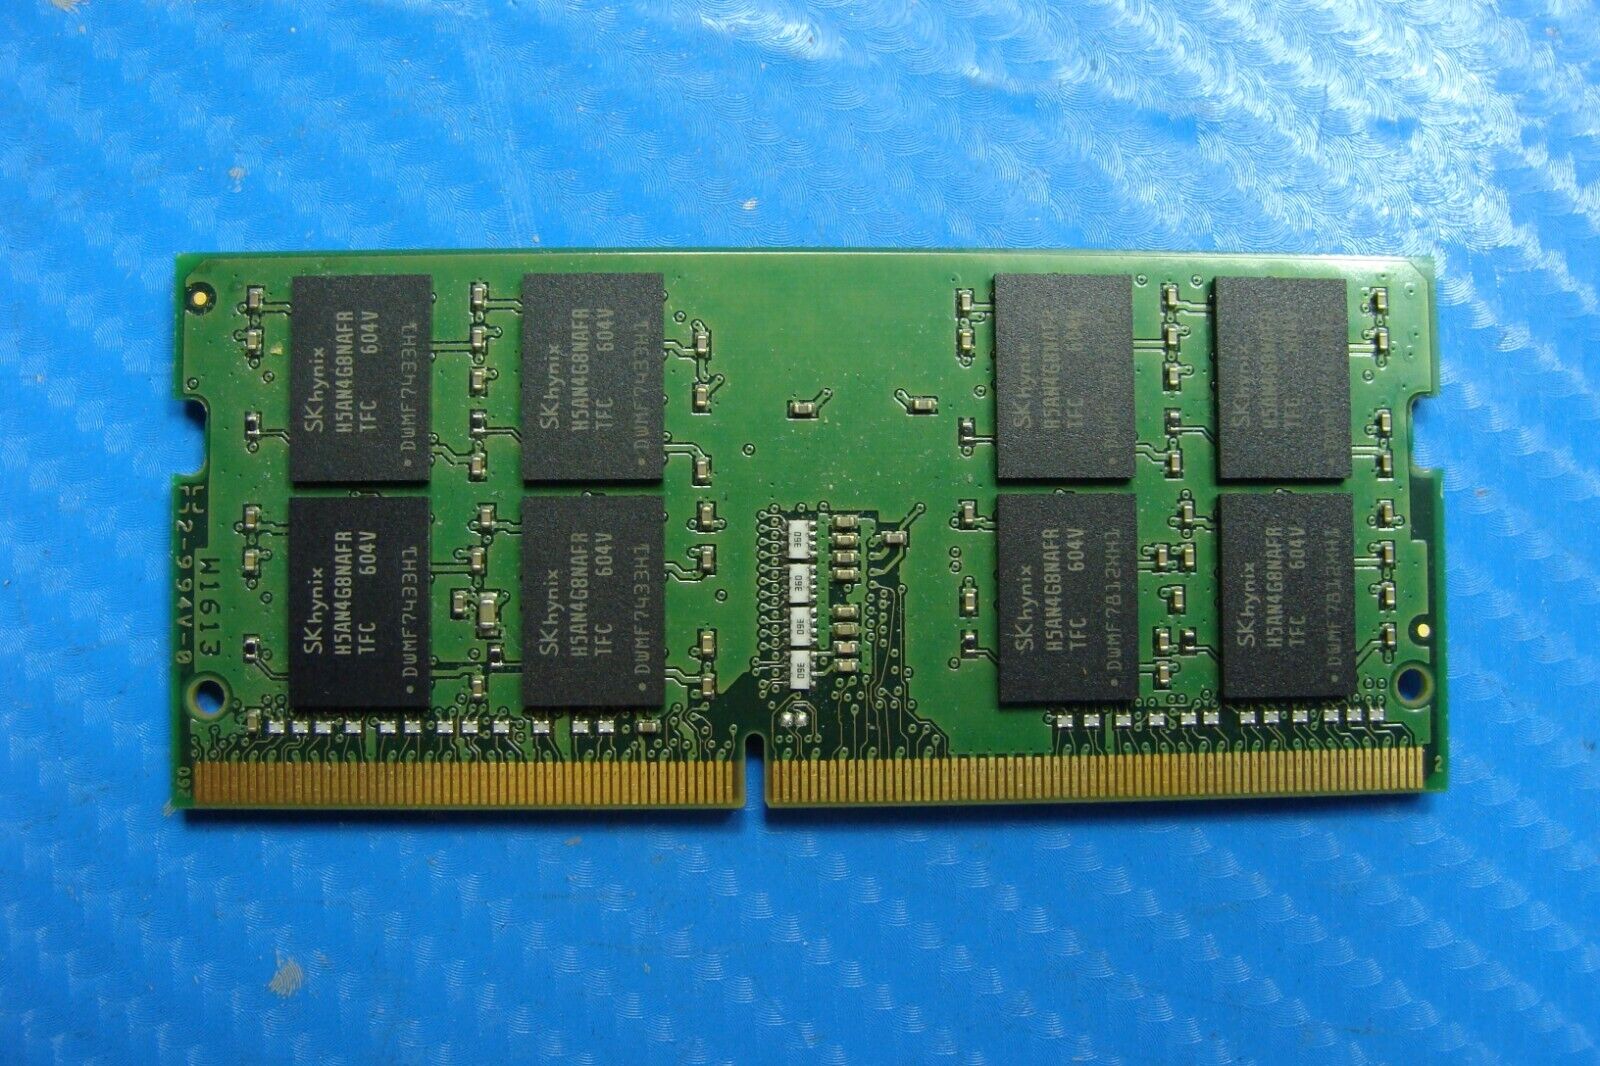 Acer E5-575G-53VG Kingston 8Gb 2Rx8 Memory Ram So-Dimm acr21d4s15hag/8g 